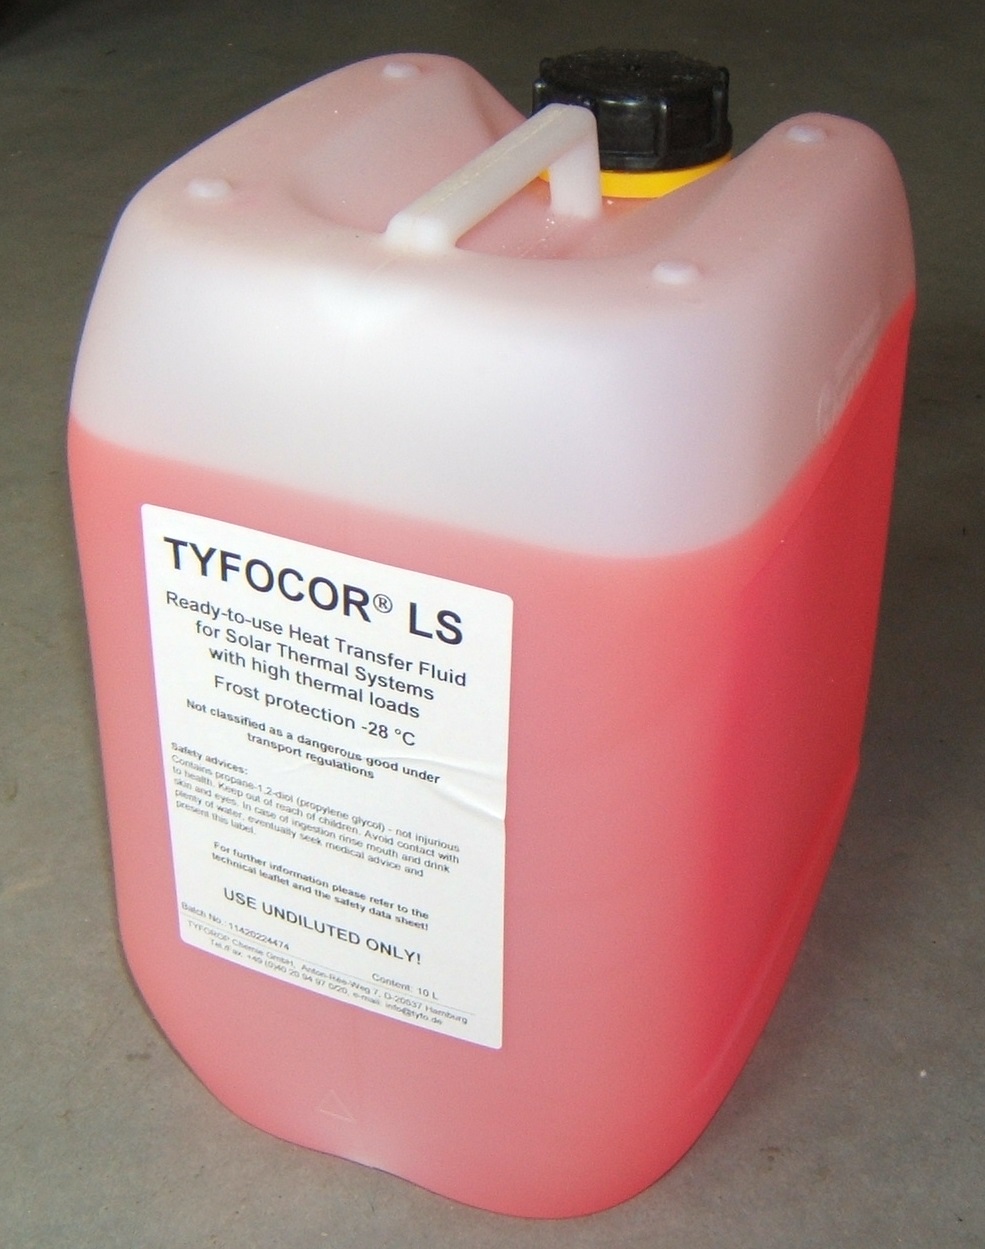 Tyfocor LS Glycol